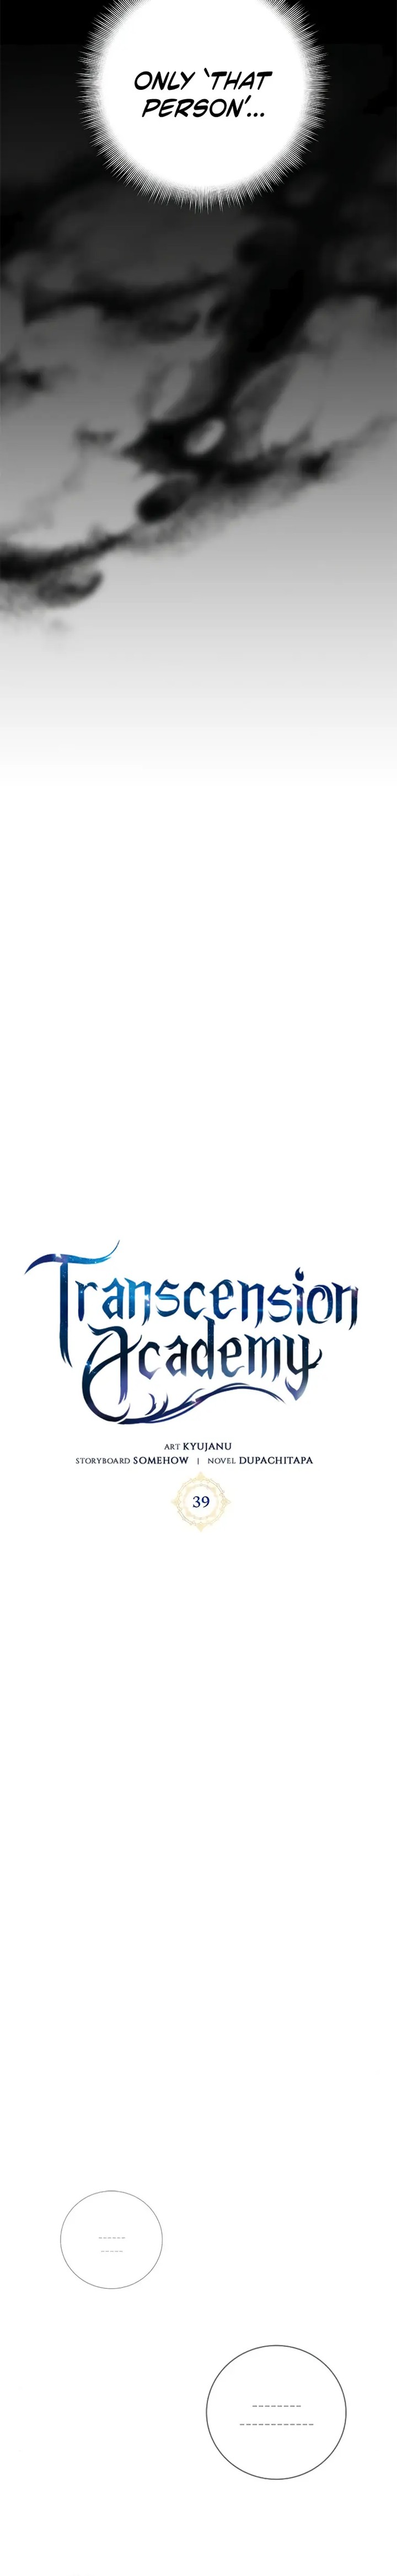 Transcension Academy 39 14